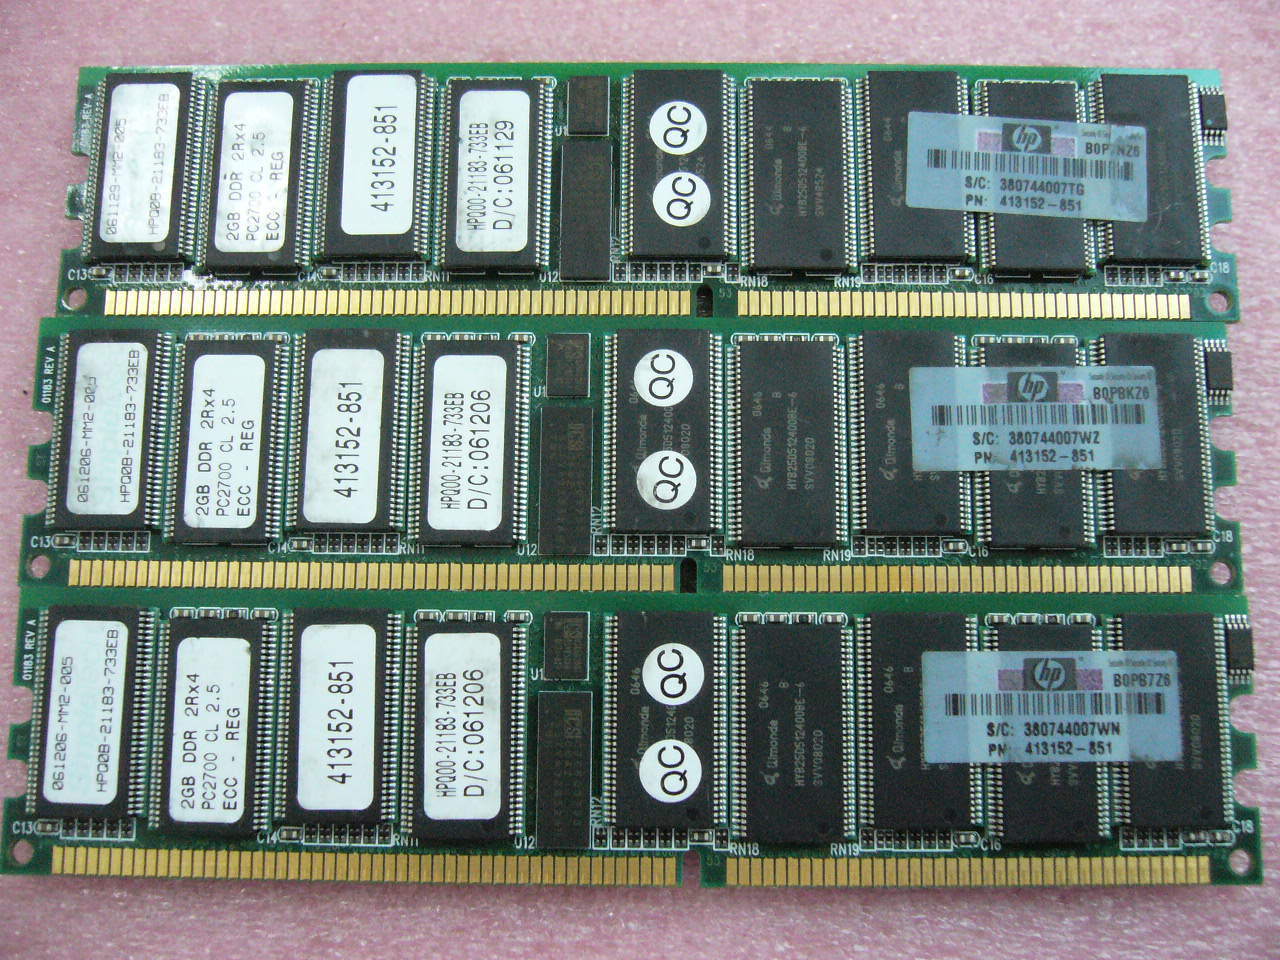 1x 2GB DDR 333 PC-2700R ECC Registered Server memory HP PN 413152-851